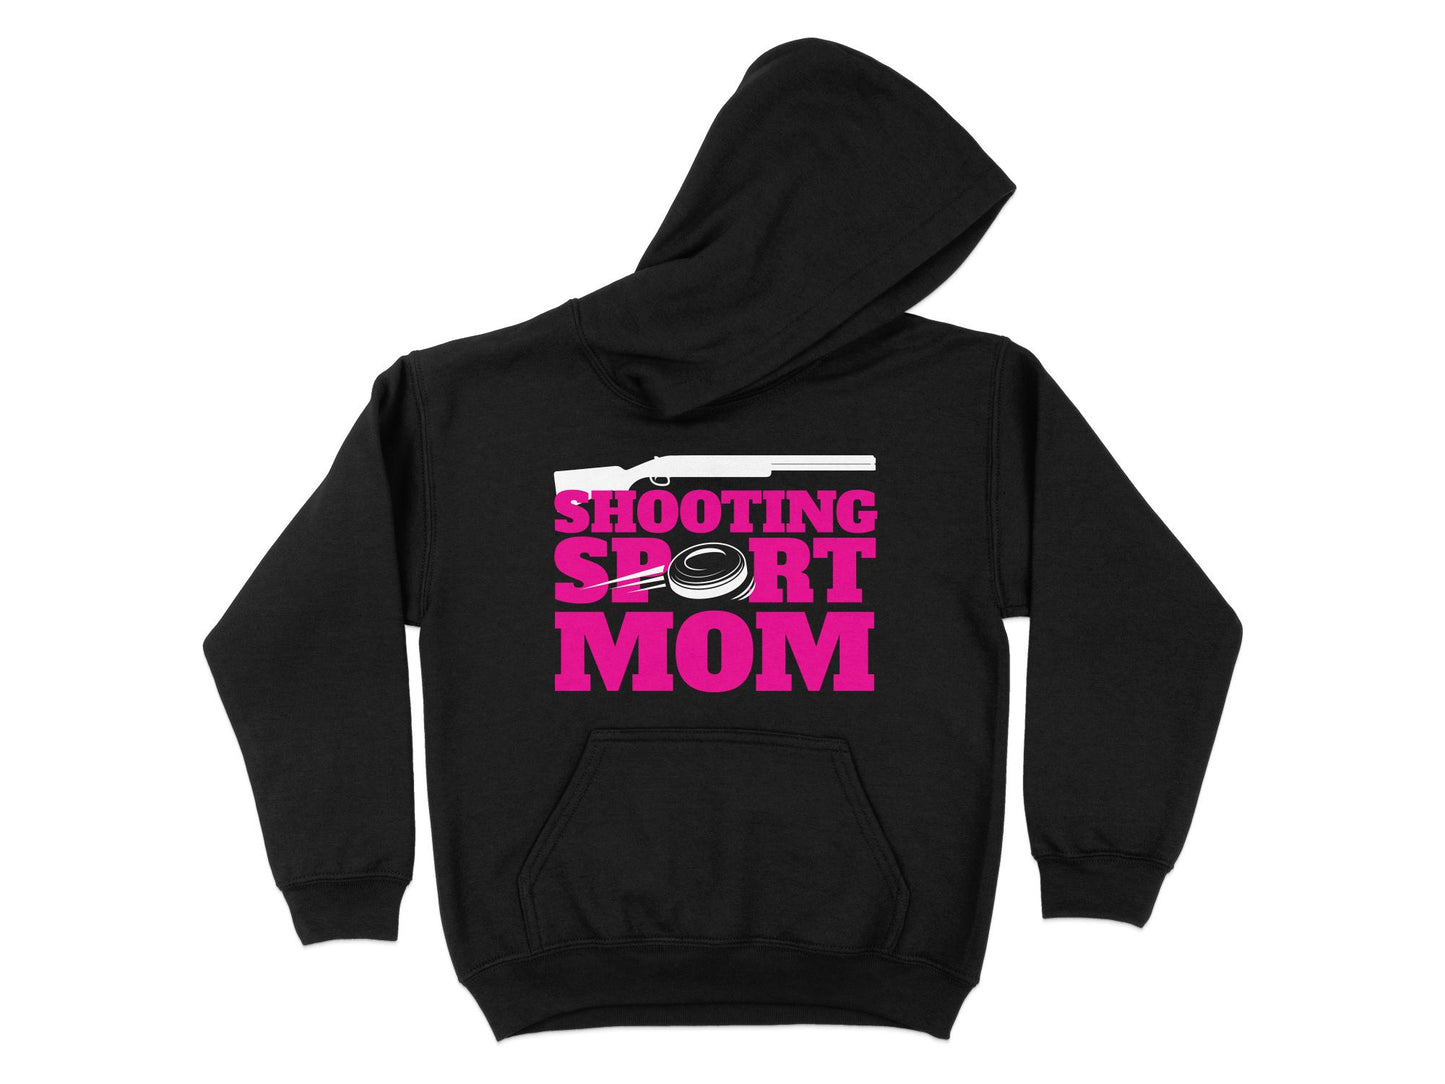 Trap Shooting Hoodie for Moms, black